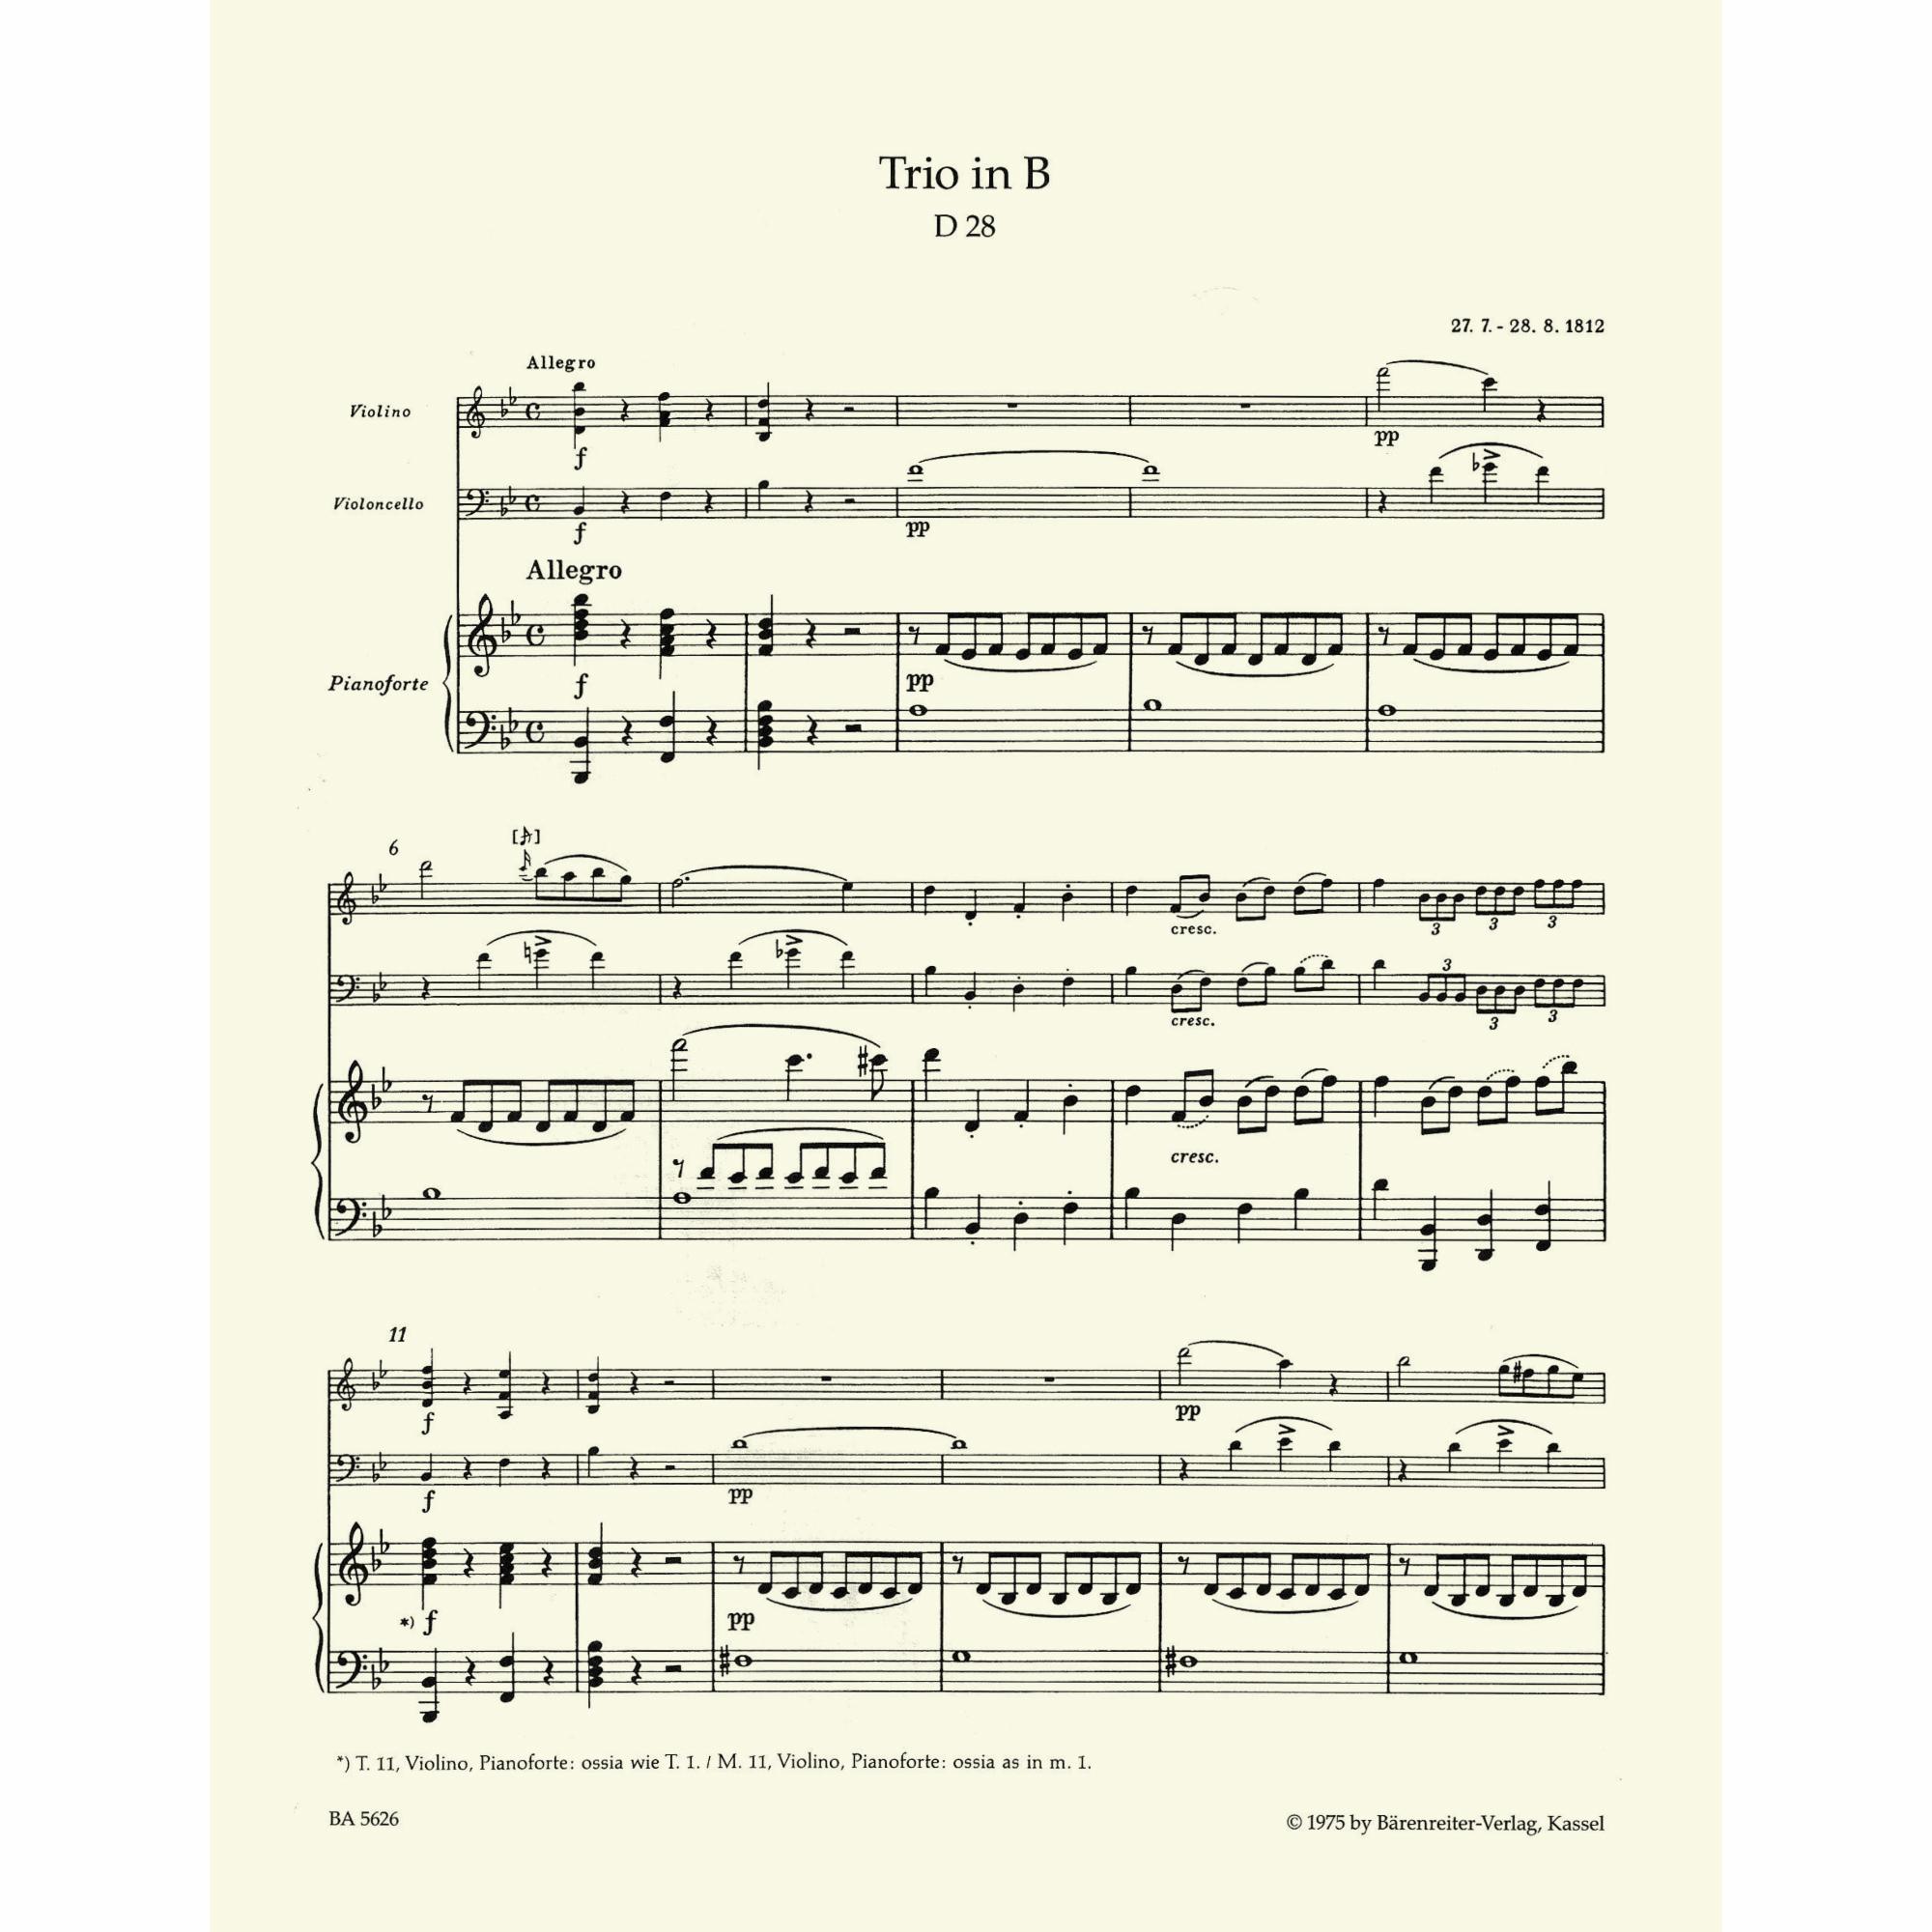 Sample: Piano (Pg. 1)